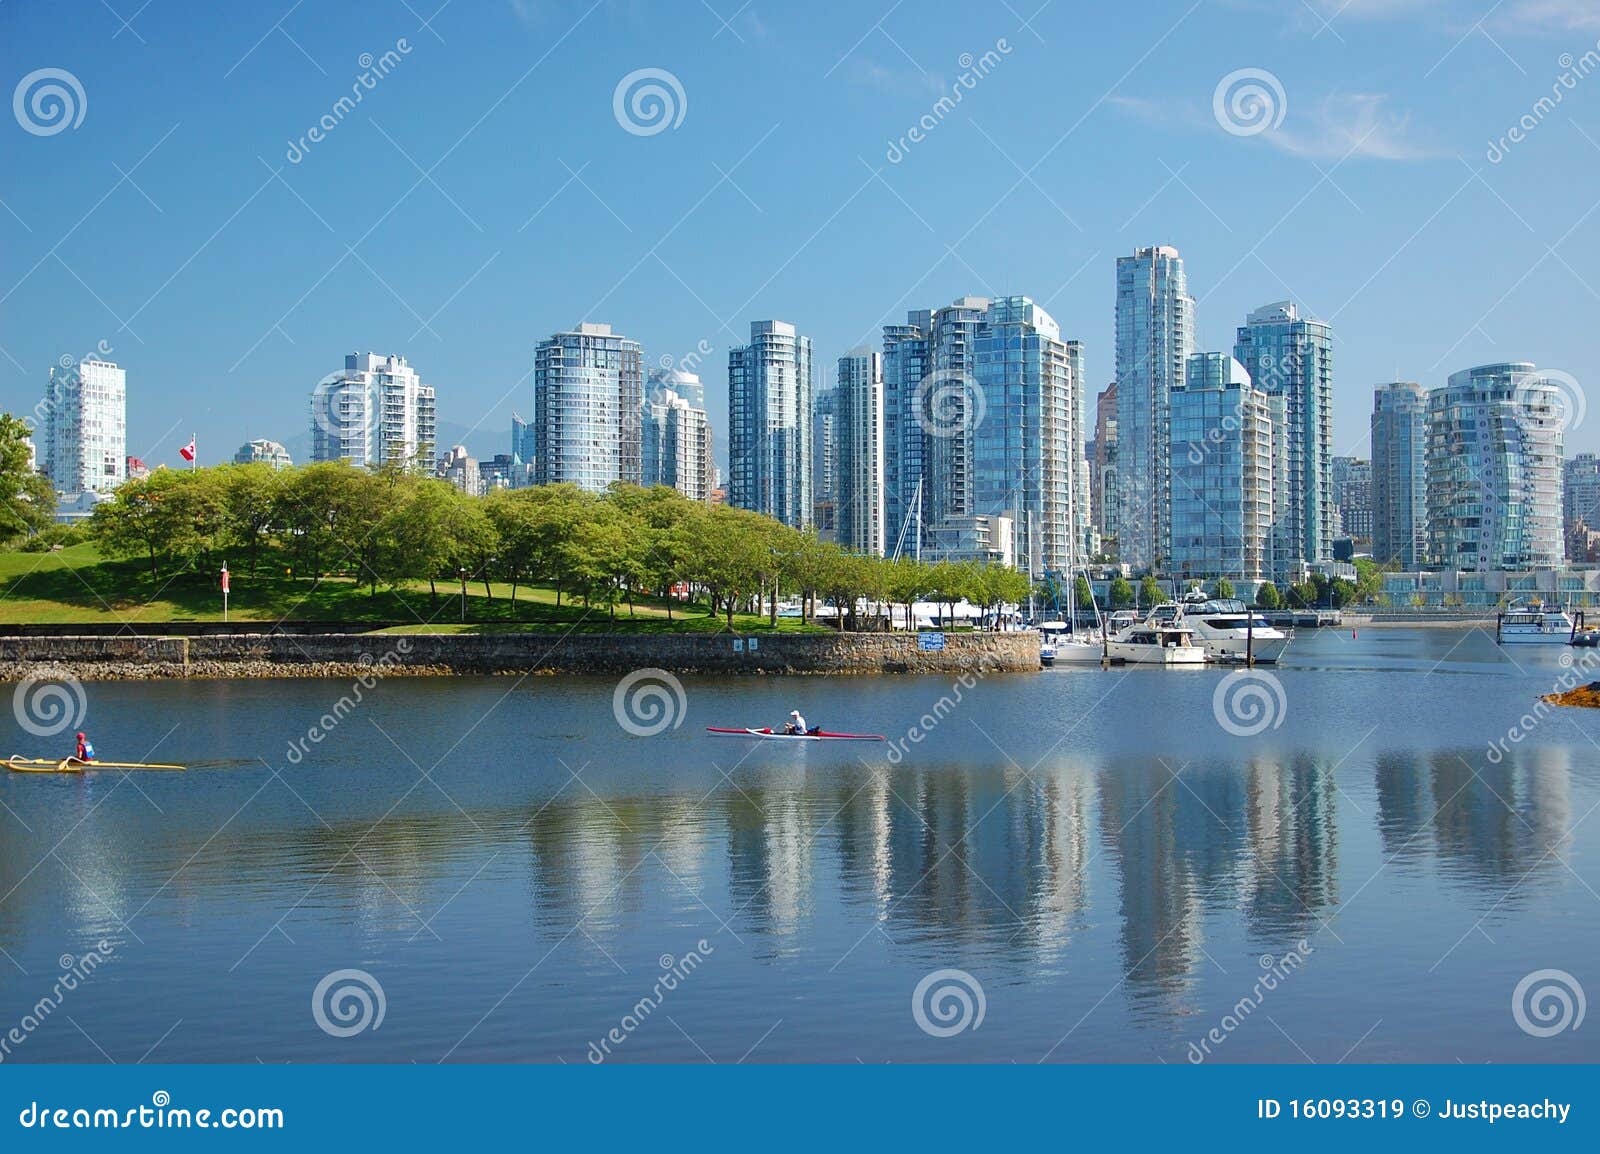 vancouver city skyline